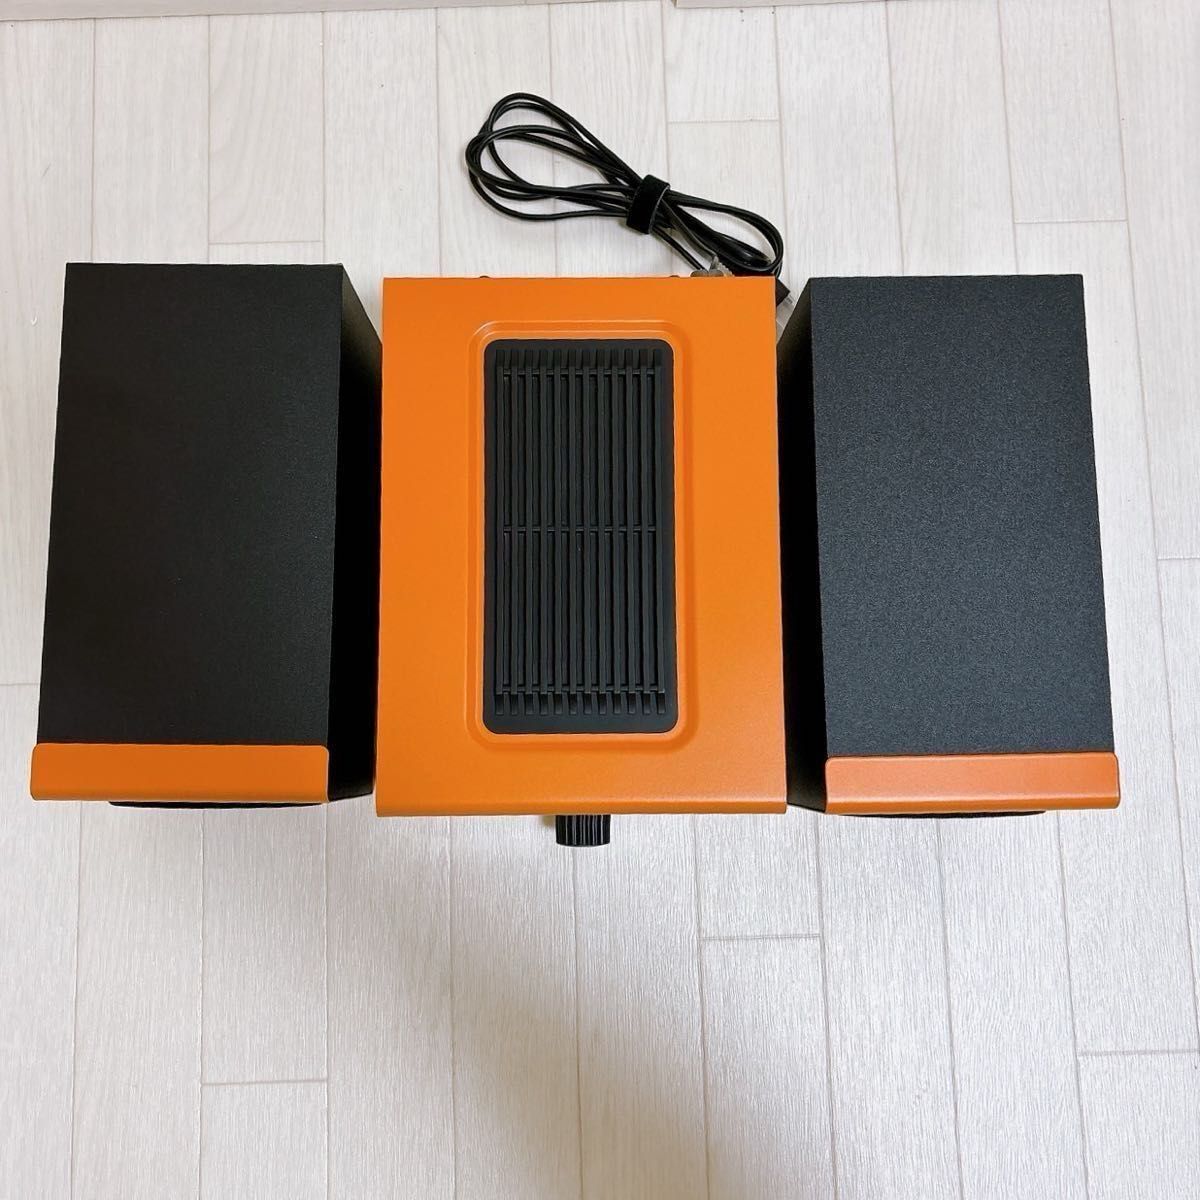  Yamaha microcomponent clock audio orange MCR-B043(D)